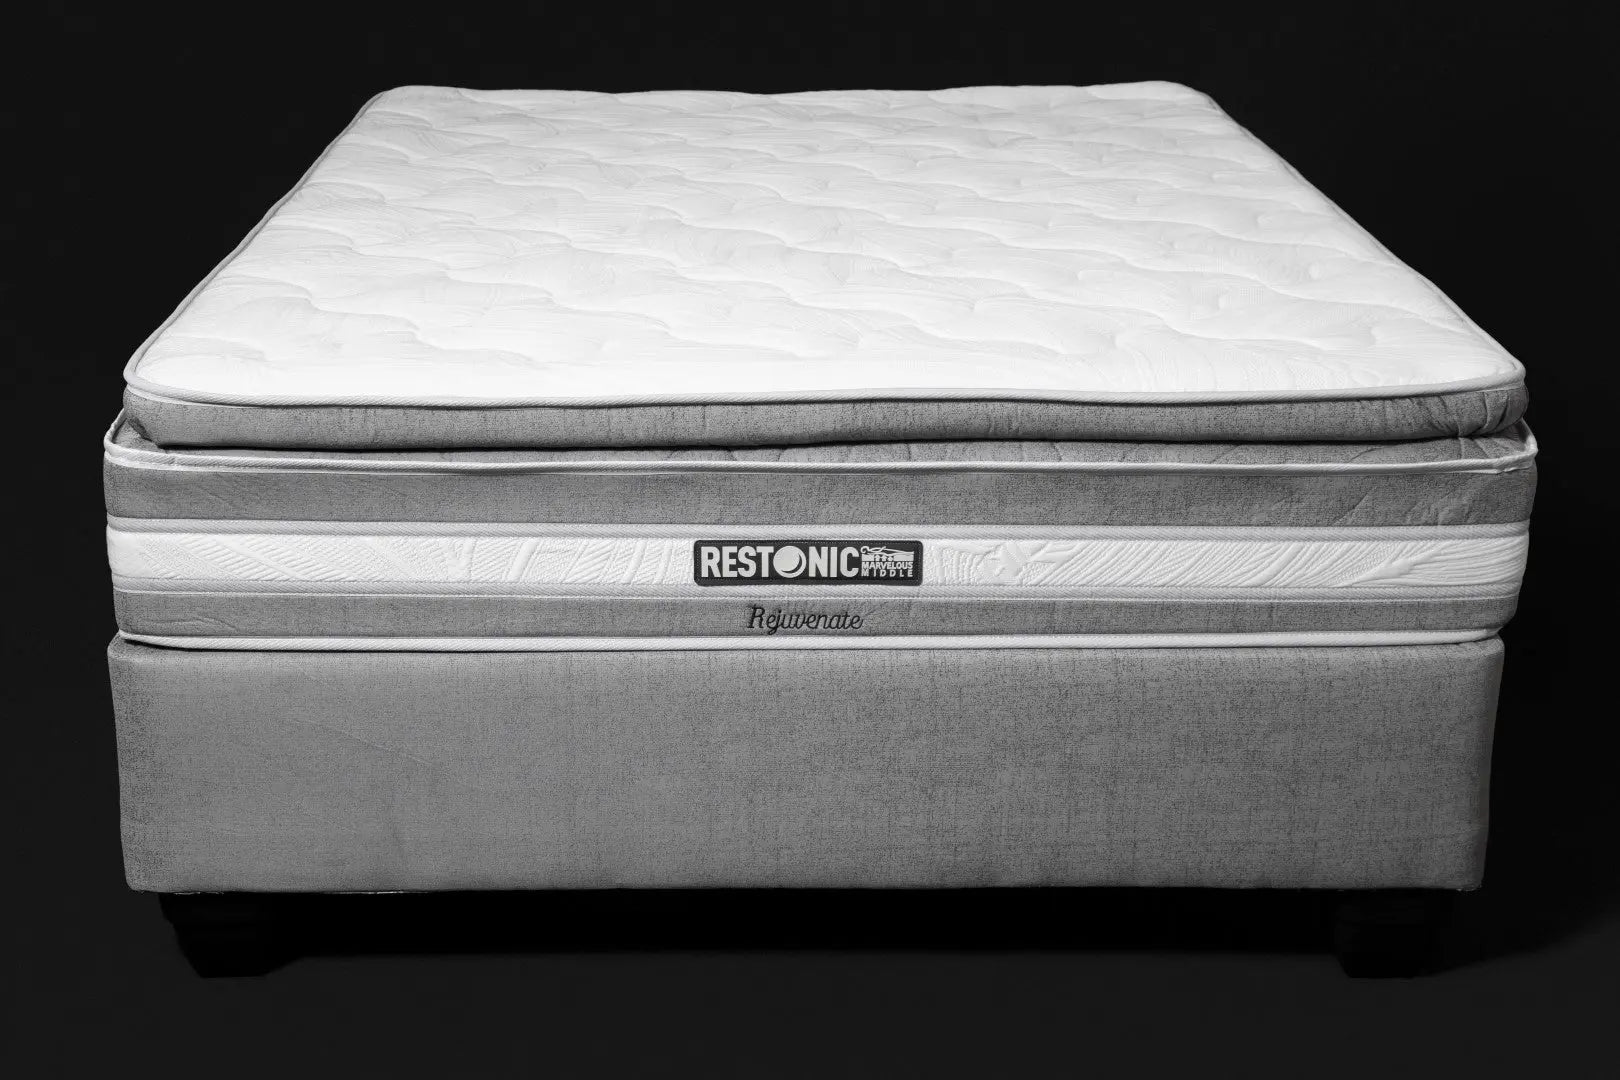 restonic king size mattress prices